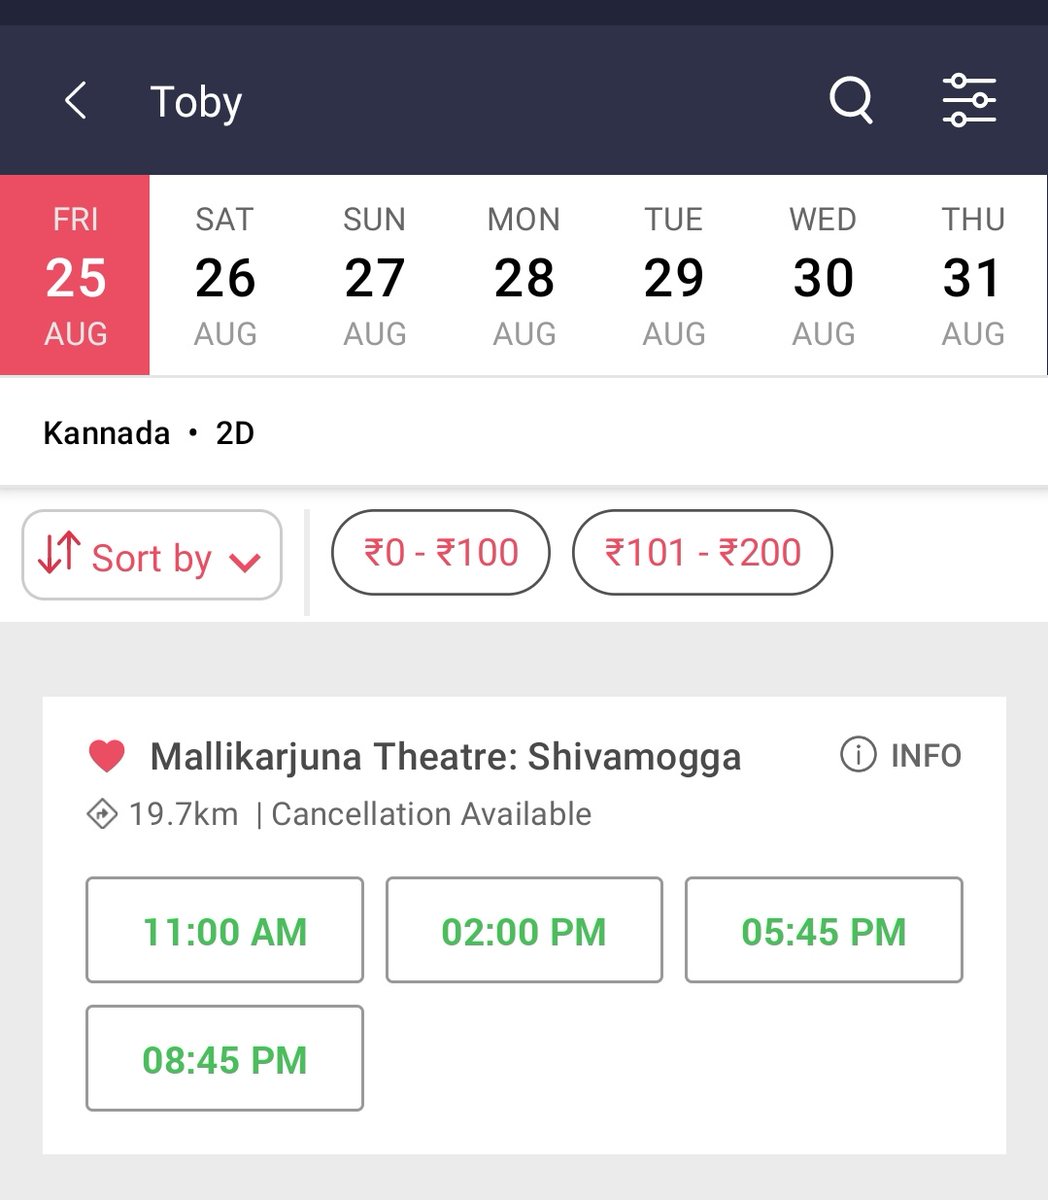 #TOBY Shivamogga single screen Mallikarjuna Theater booking open now

 𝐈𝐍 𝐂𝐈𝐍𝐄𝐌𝐀𝐒 𝟐𝟓 𝐀𝐔𝐆𝐔𝐒𝐓, 𝟐𝟎𝟐𝟑

 @rajbshettyOMK #BasilALChalakkal @Chaithra_Achar_ @samyuktahornad #PraveenShriyan @m3dhun @lighterbuddha @AgasthyaFilms @SmoothSailors1 @KvnProductions